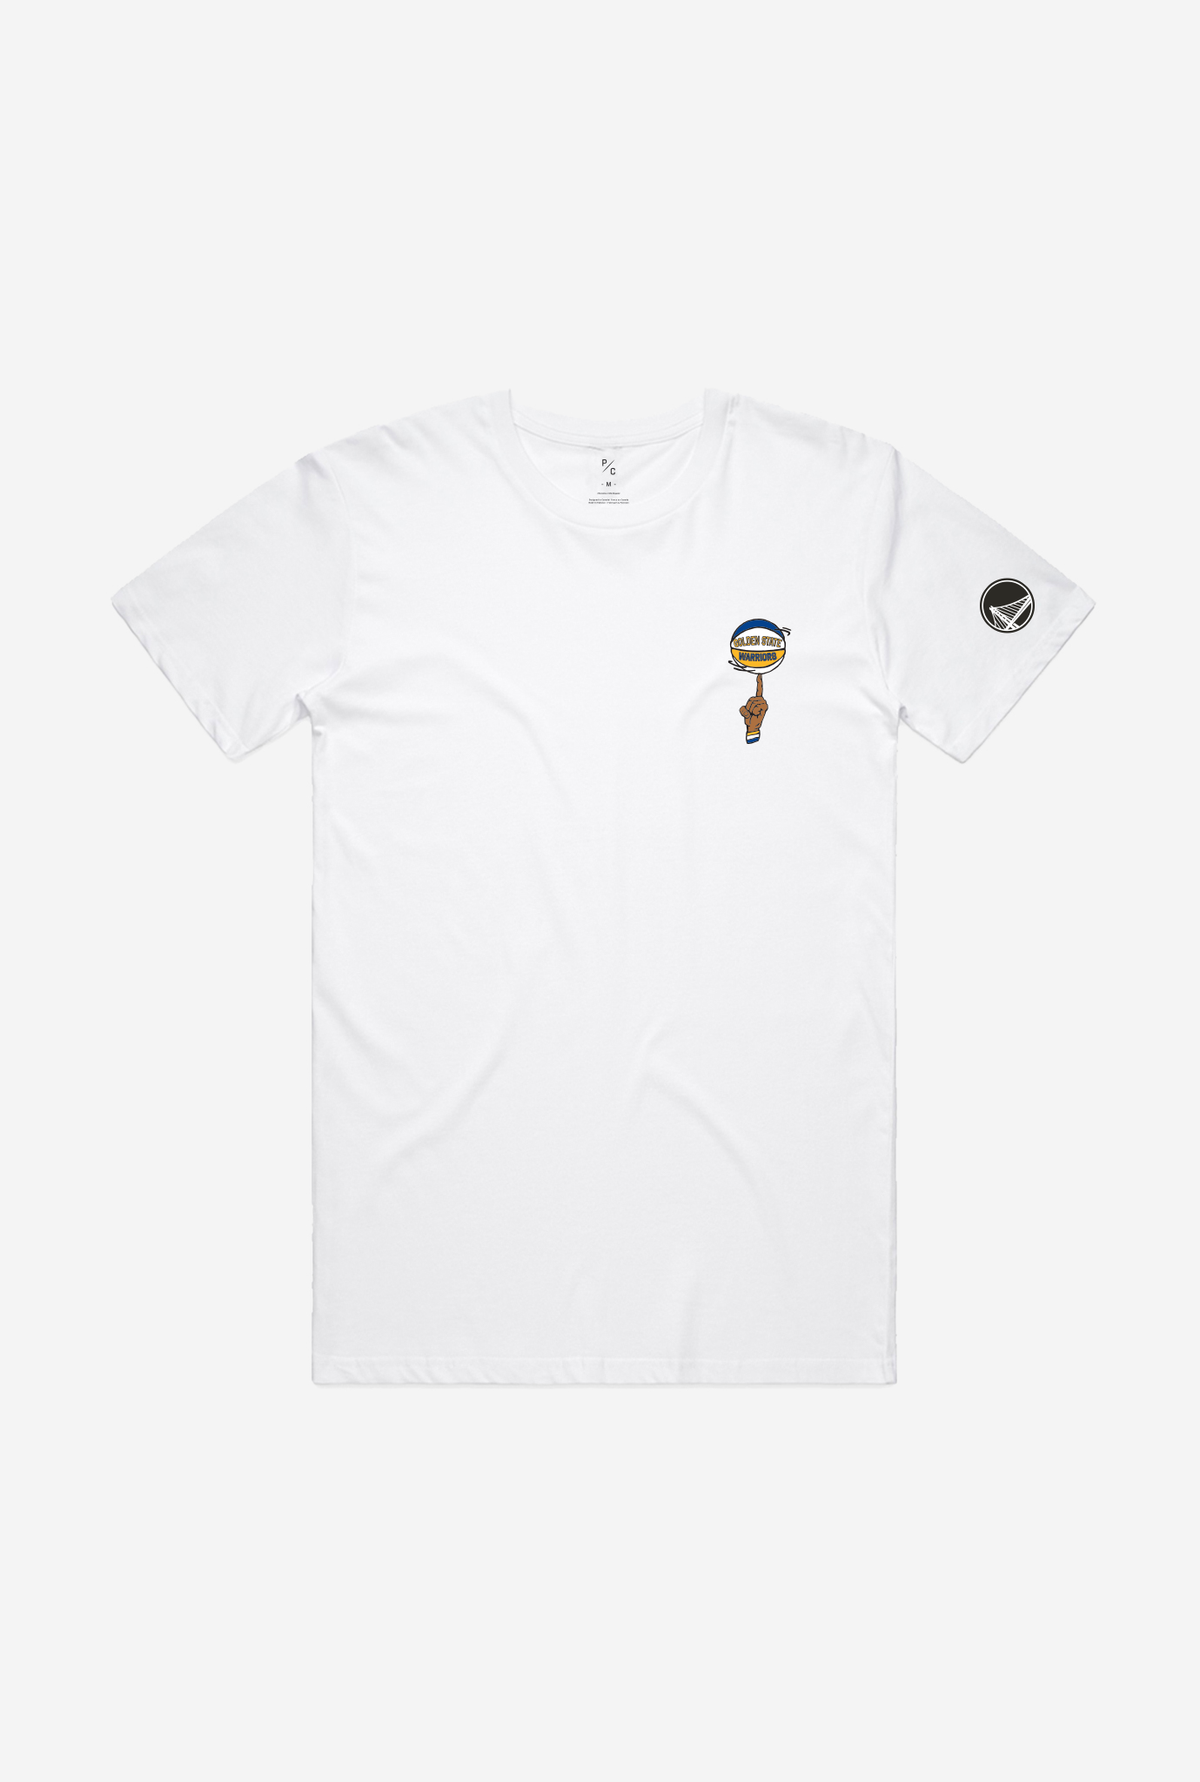 Golden State Warriors Spinning Ball T-Shirt - White